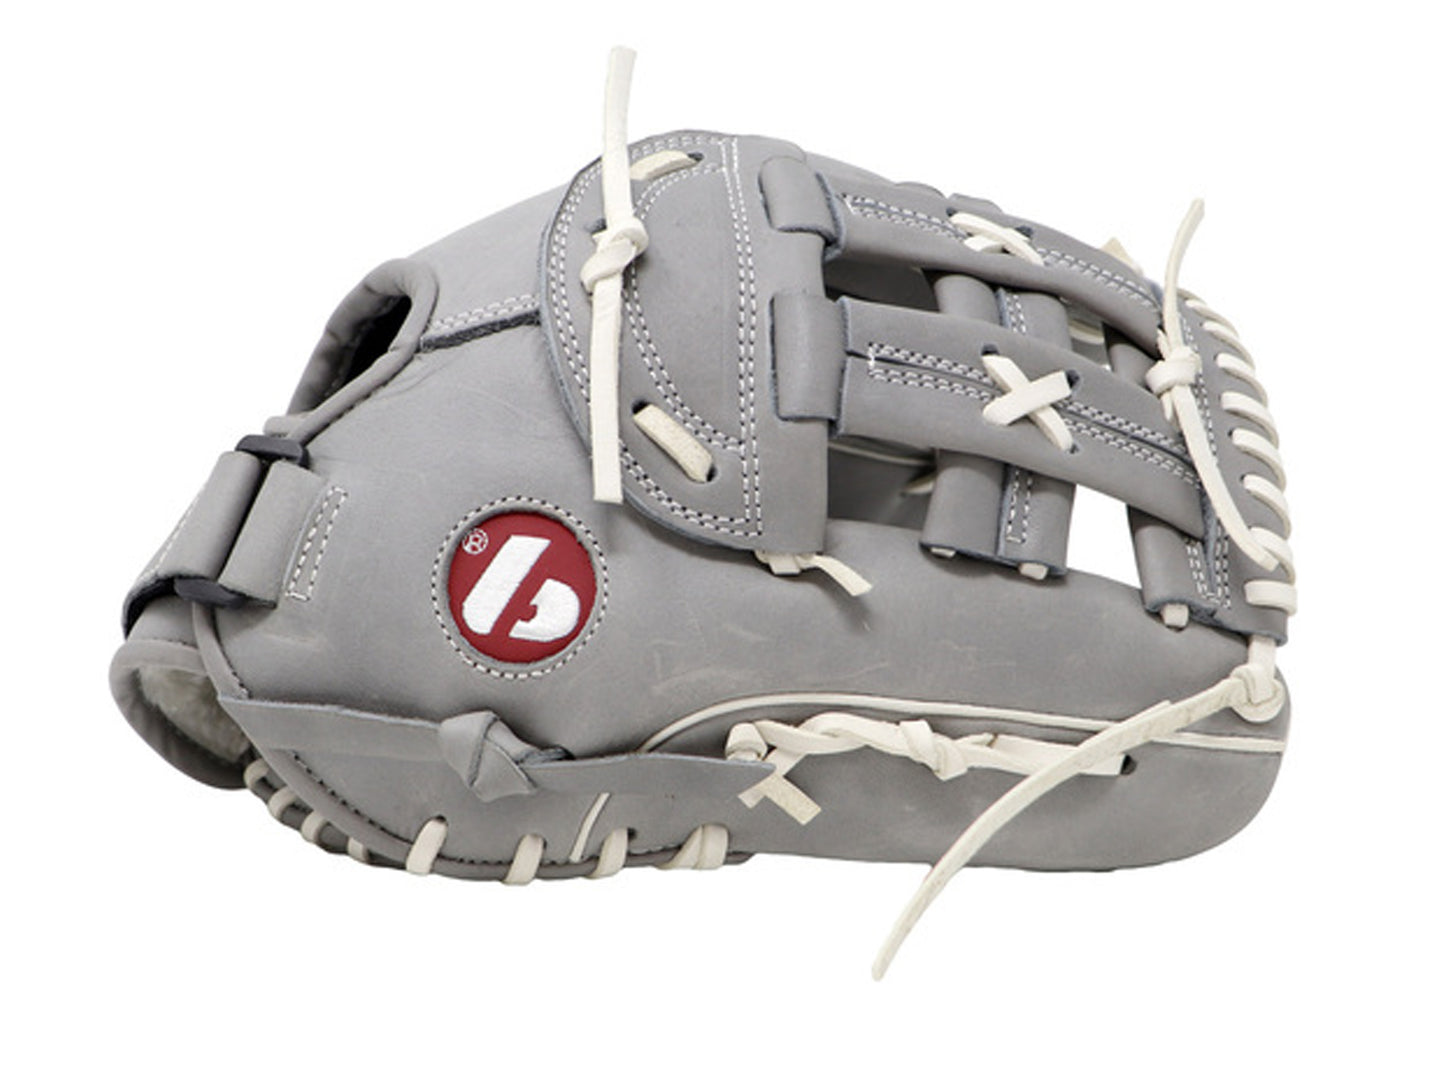 FL-130 professional baseball glove, full grain leather, outfield, softball, 13''